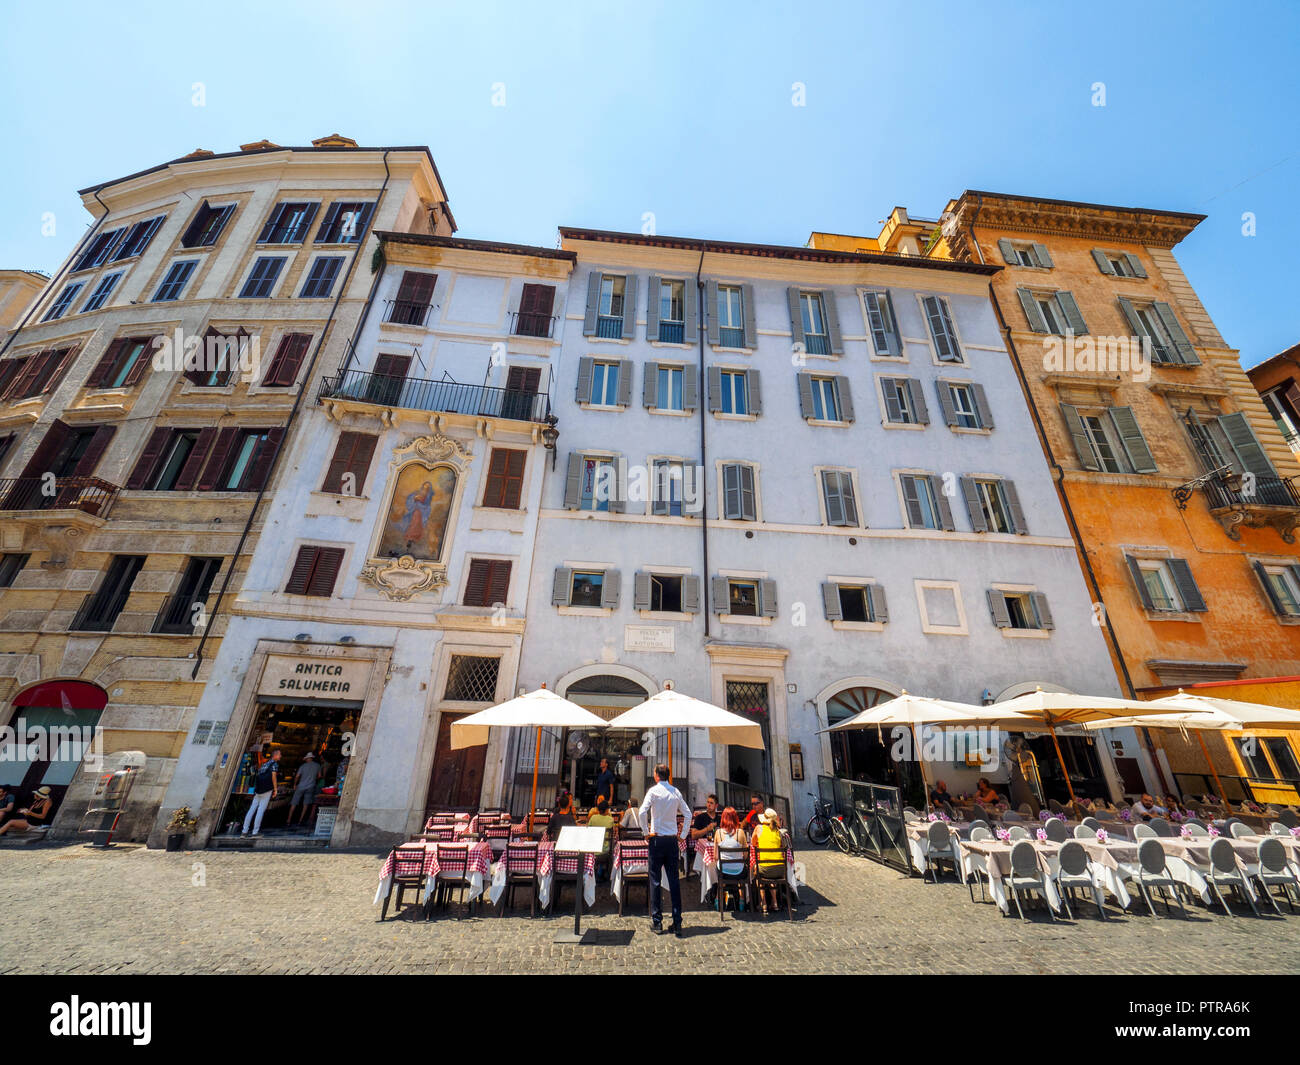 Restaurant in Piazza della Rotonda near the Pantheon - Rome, Italy Stock Photo